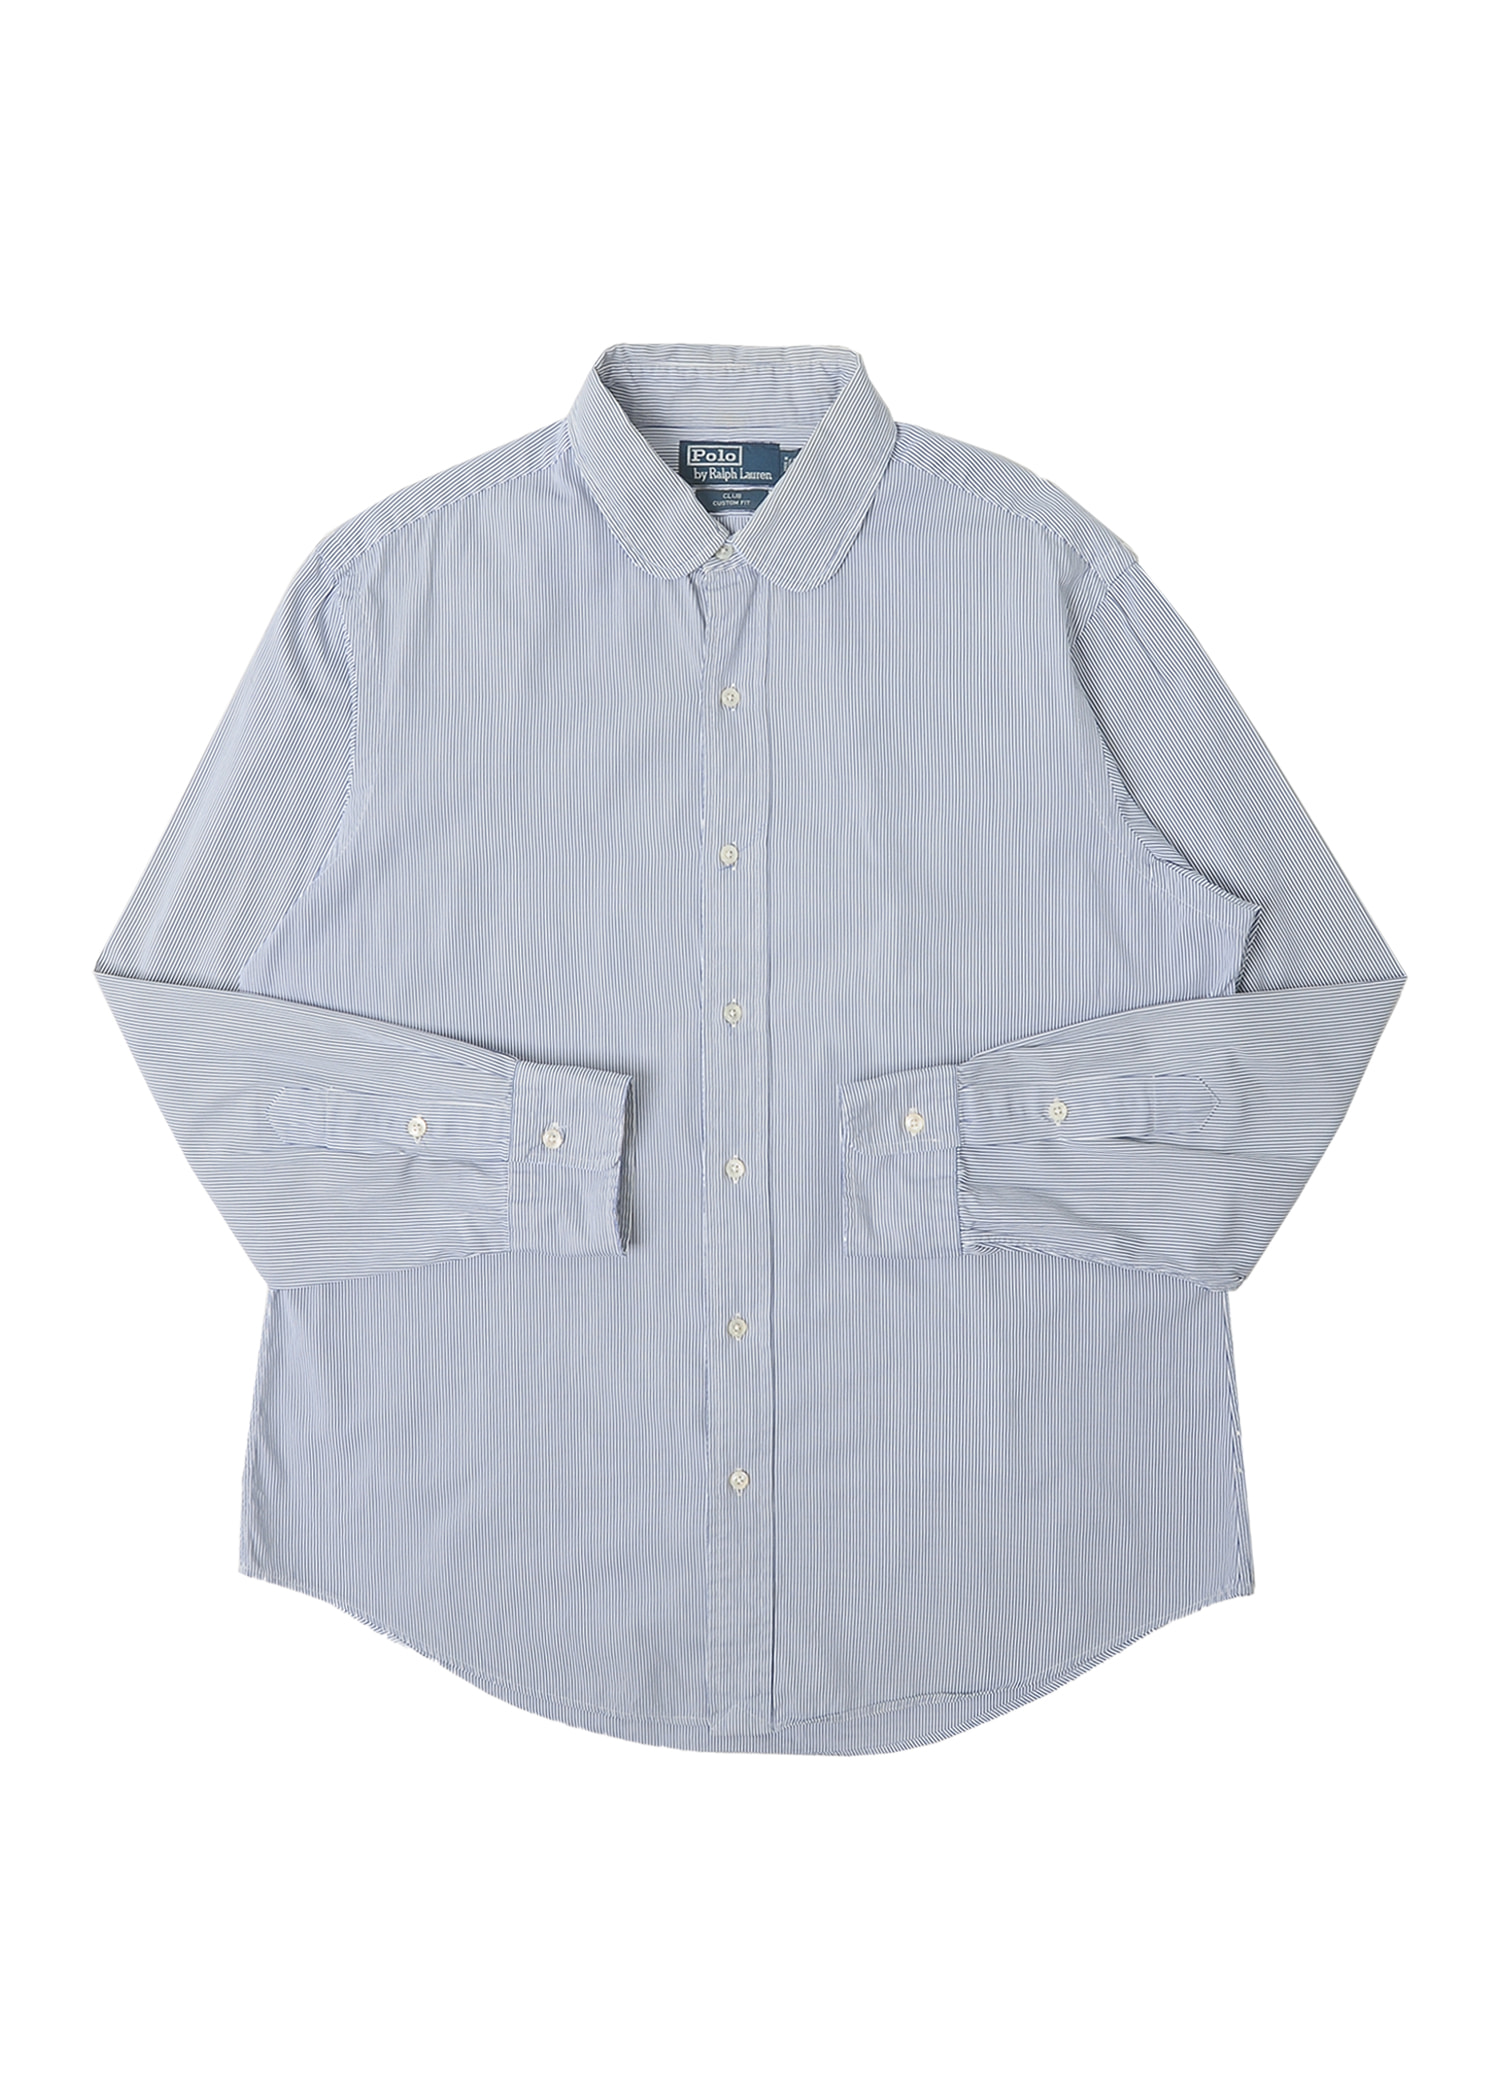 Polo by Ralph Lauren stripe round collar shirts